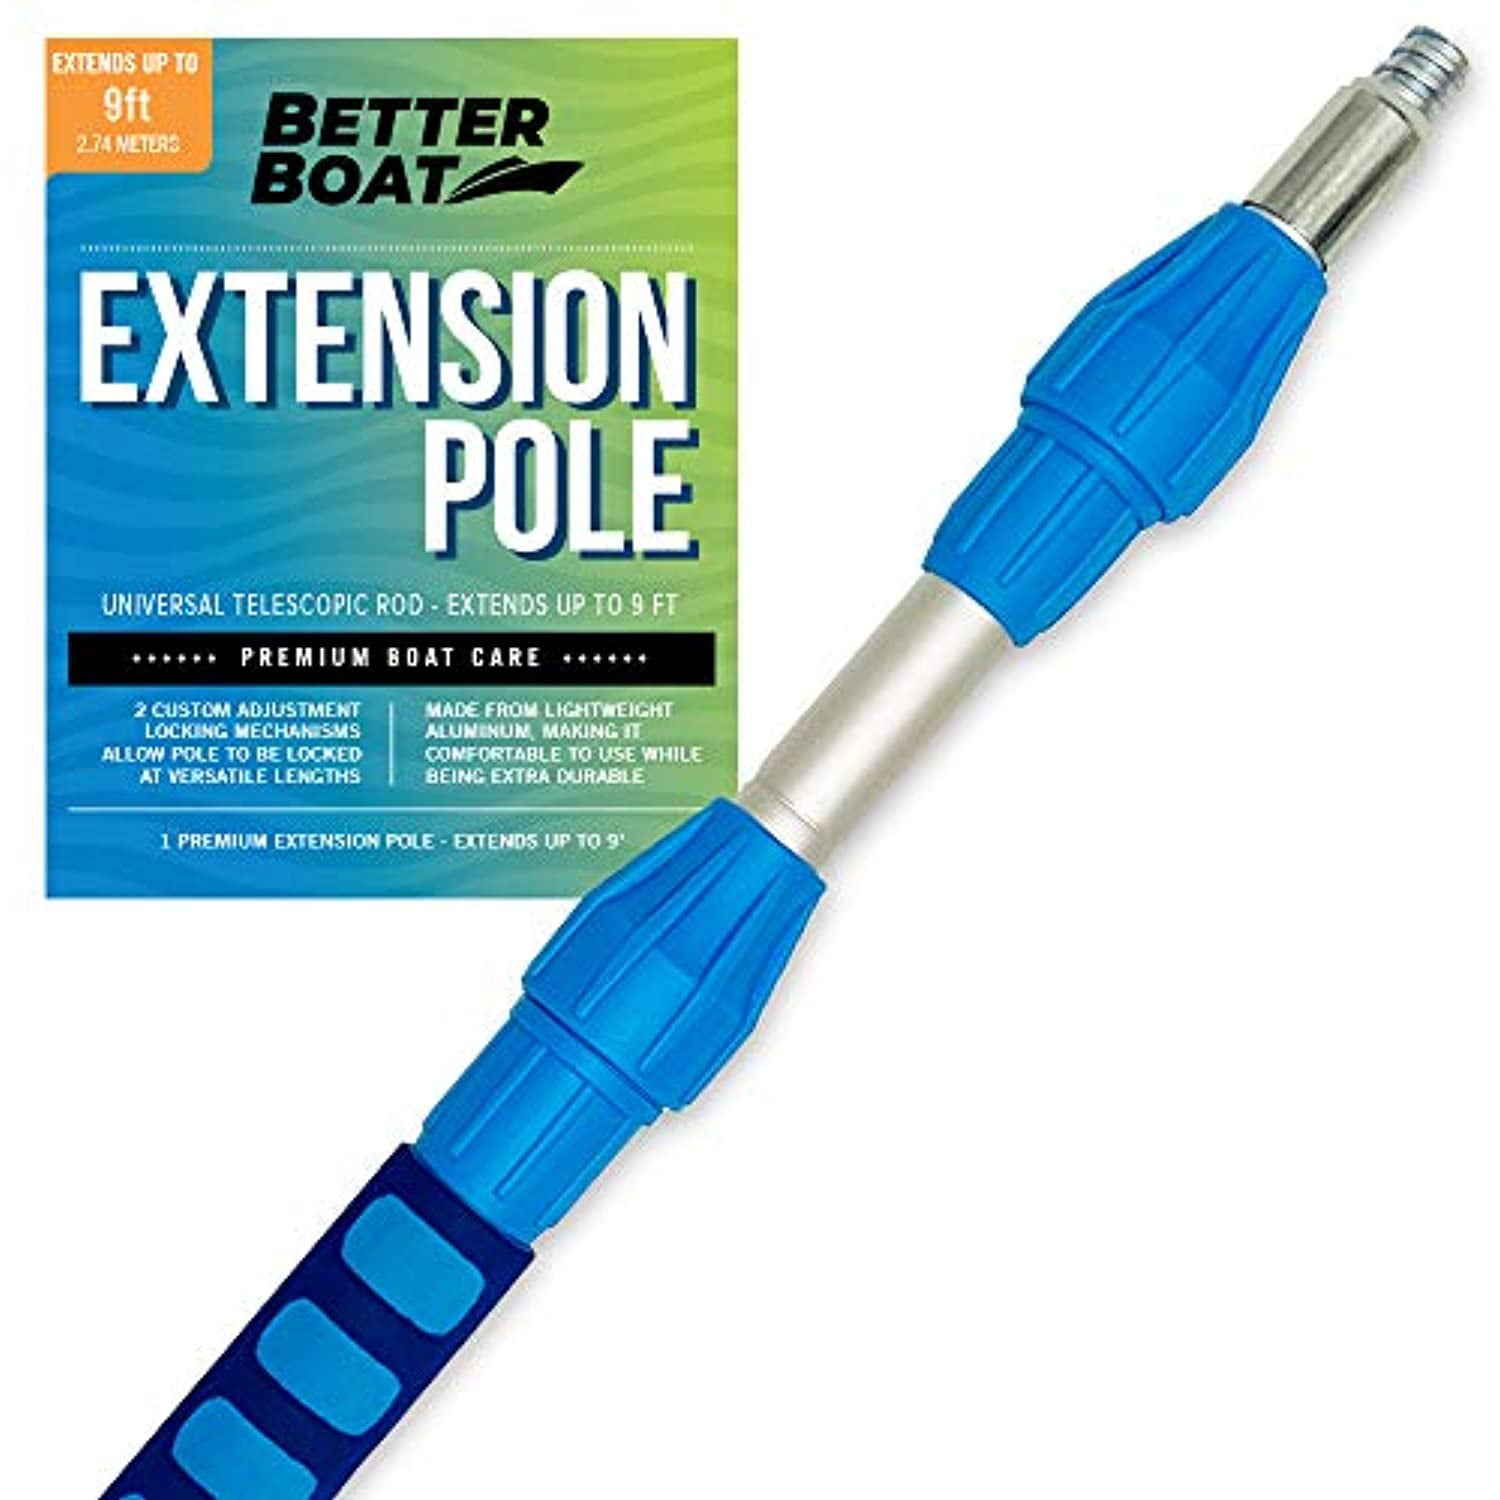 X Pole Extension